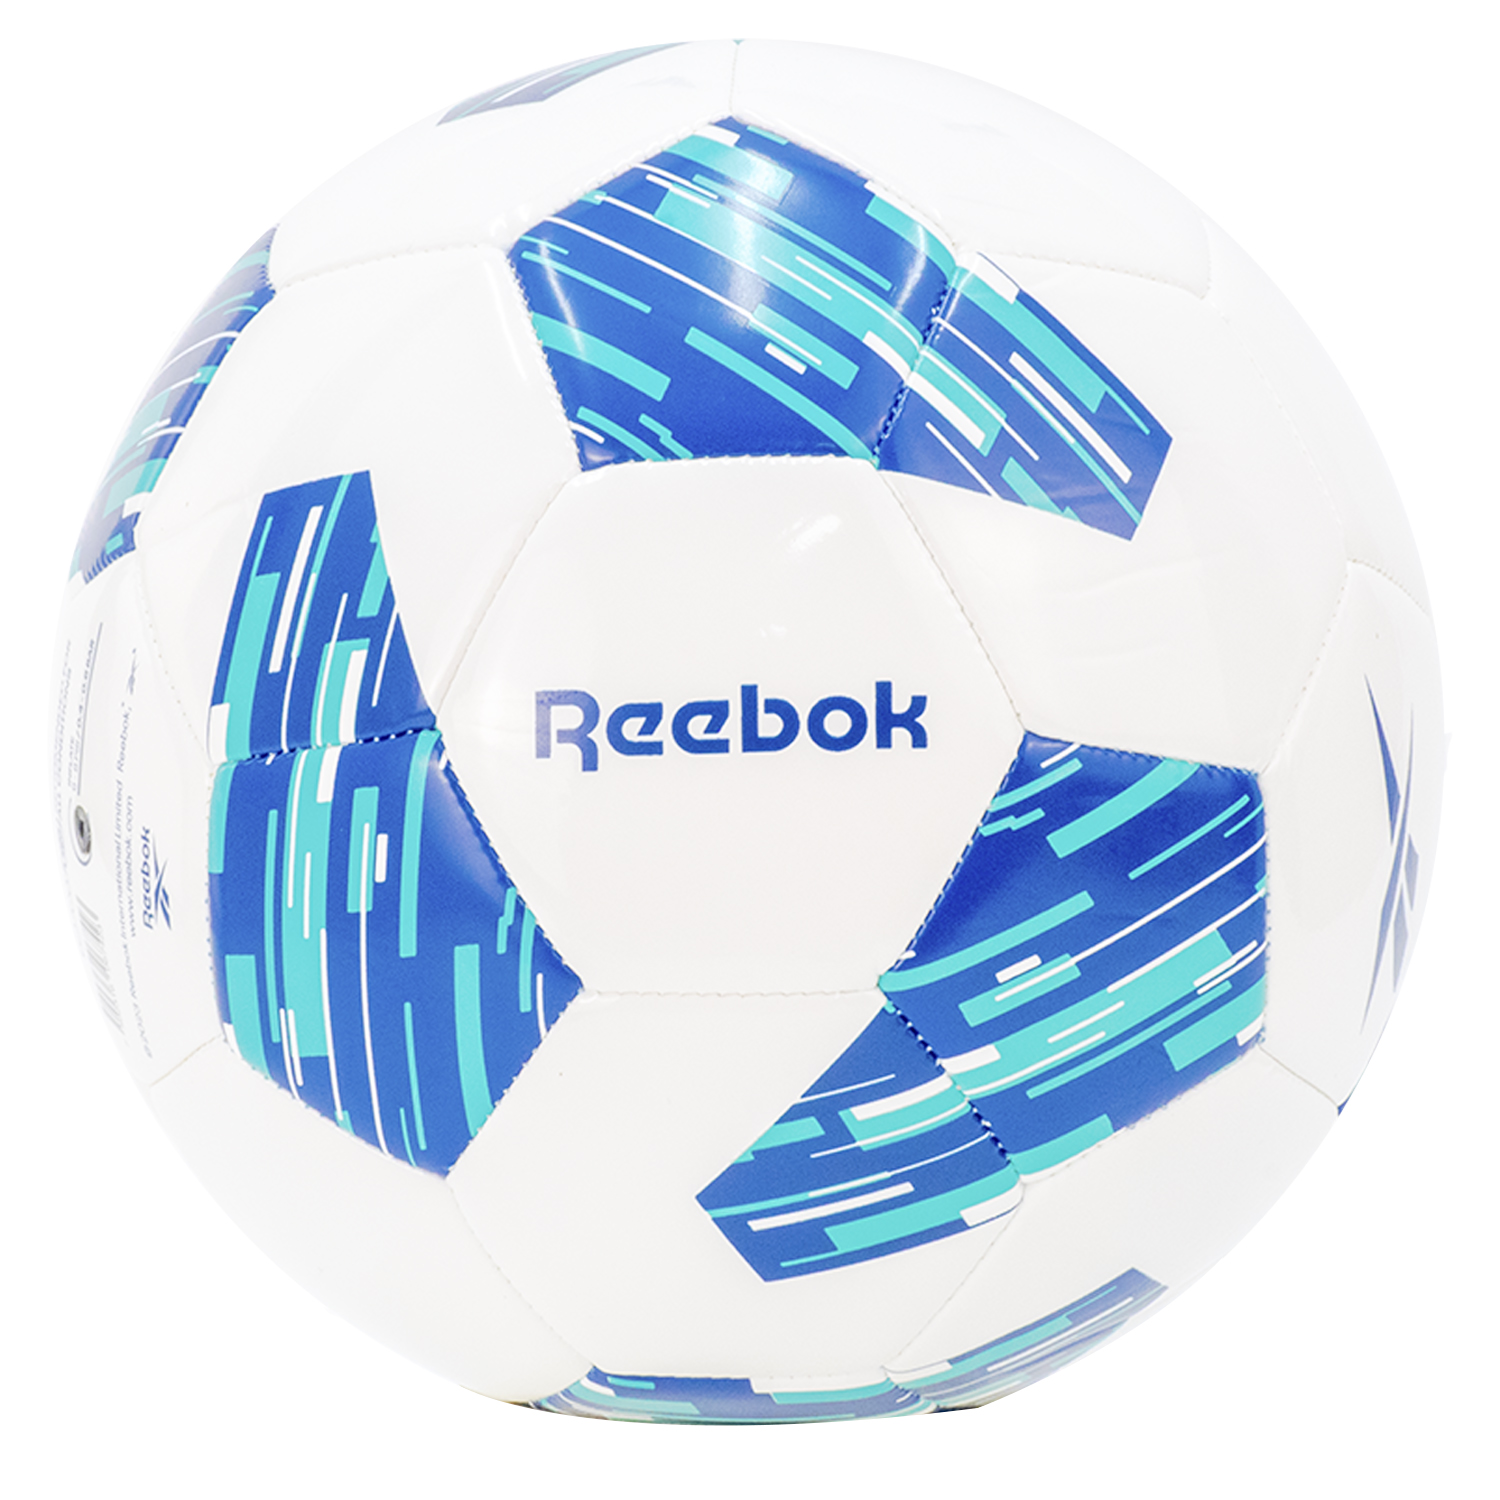 Balón de voleibol Molten 5000 - Winner Industria Deportiva